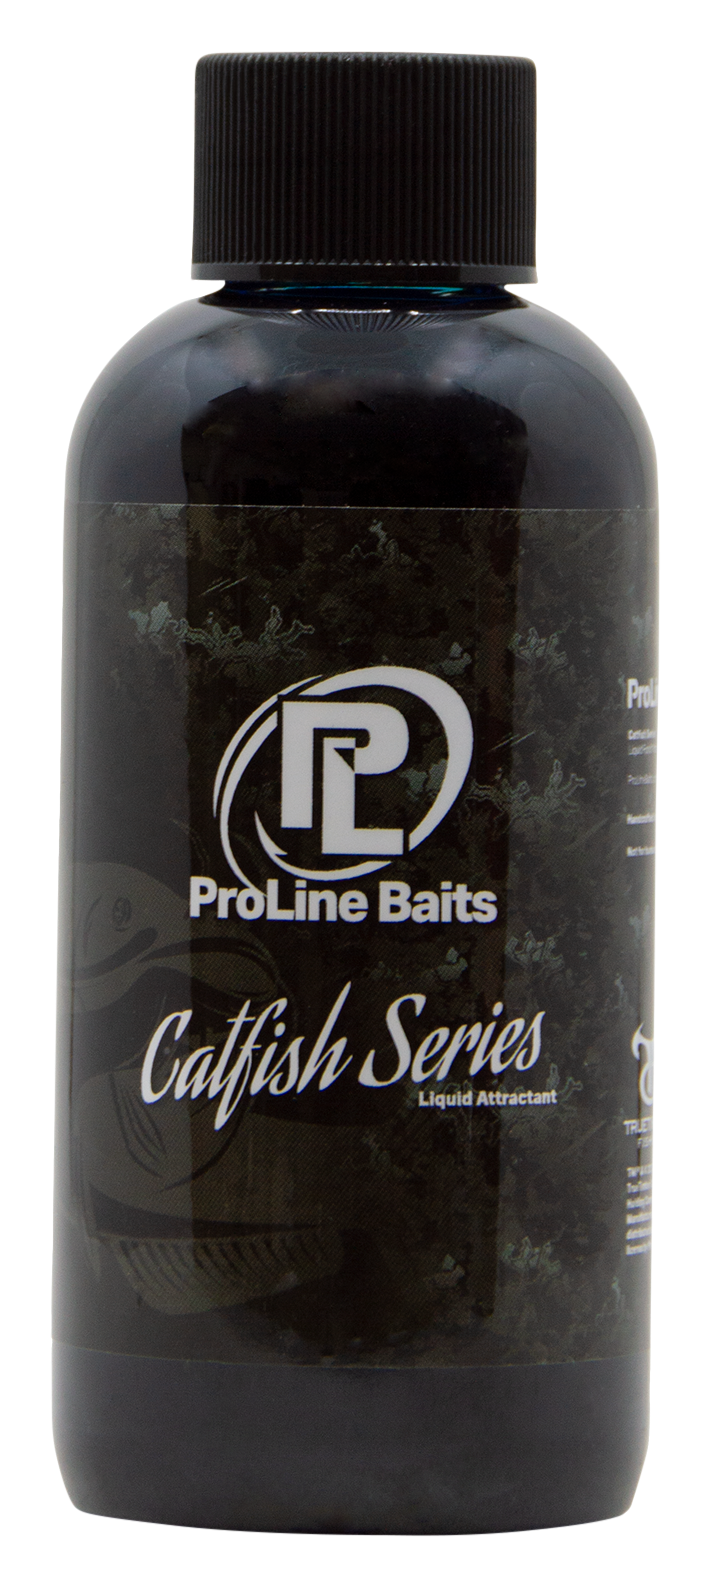 Proline Baits Catfish Series Fish Attractant - Cut Bait